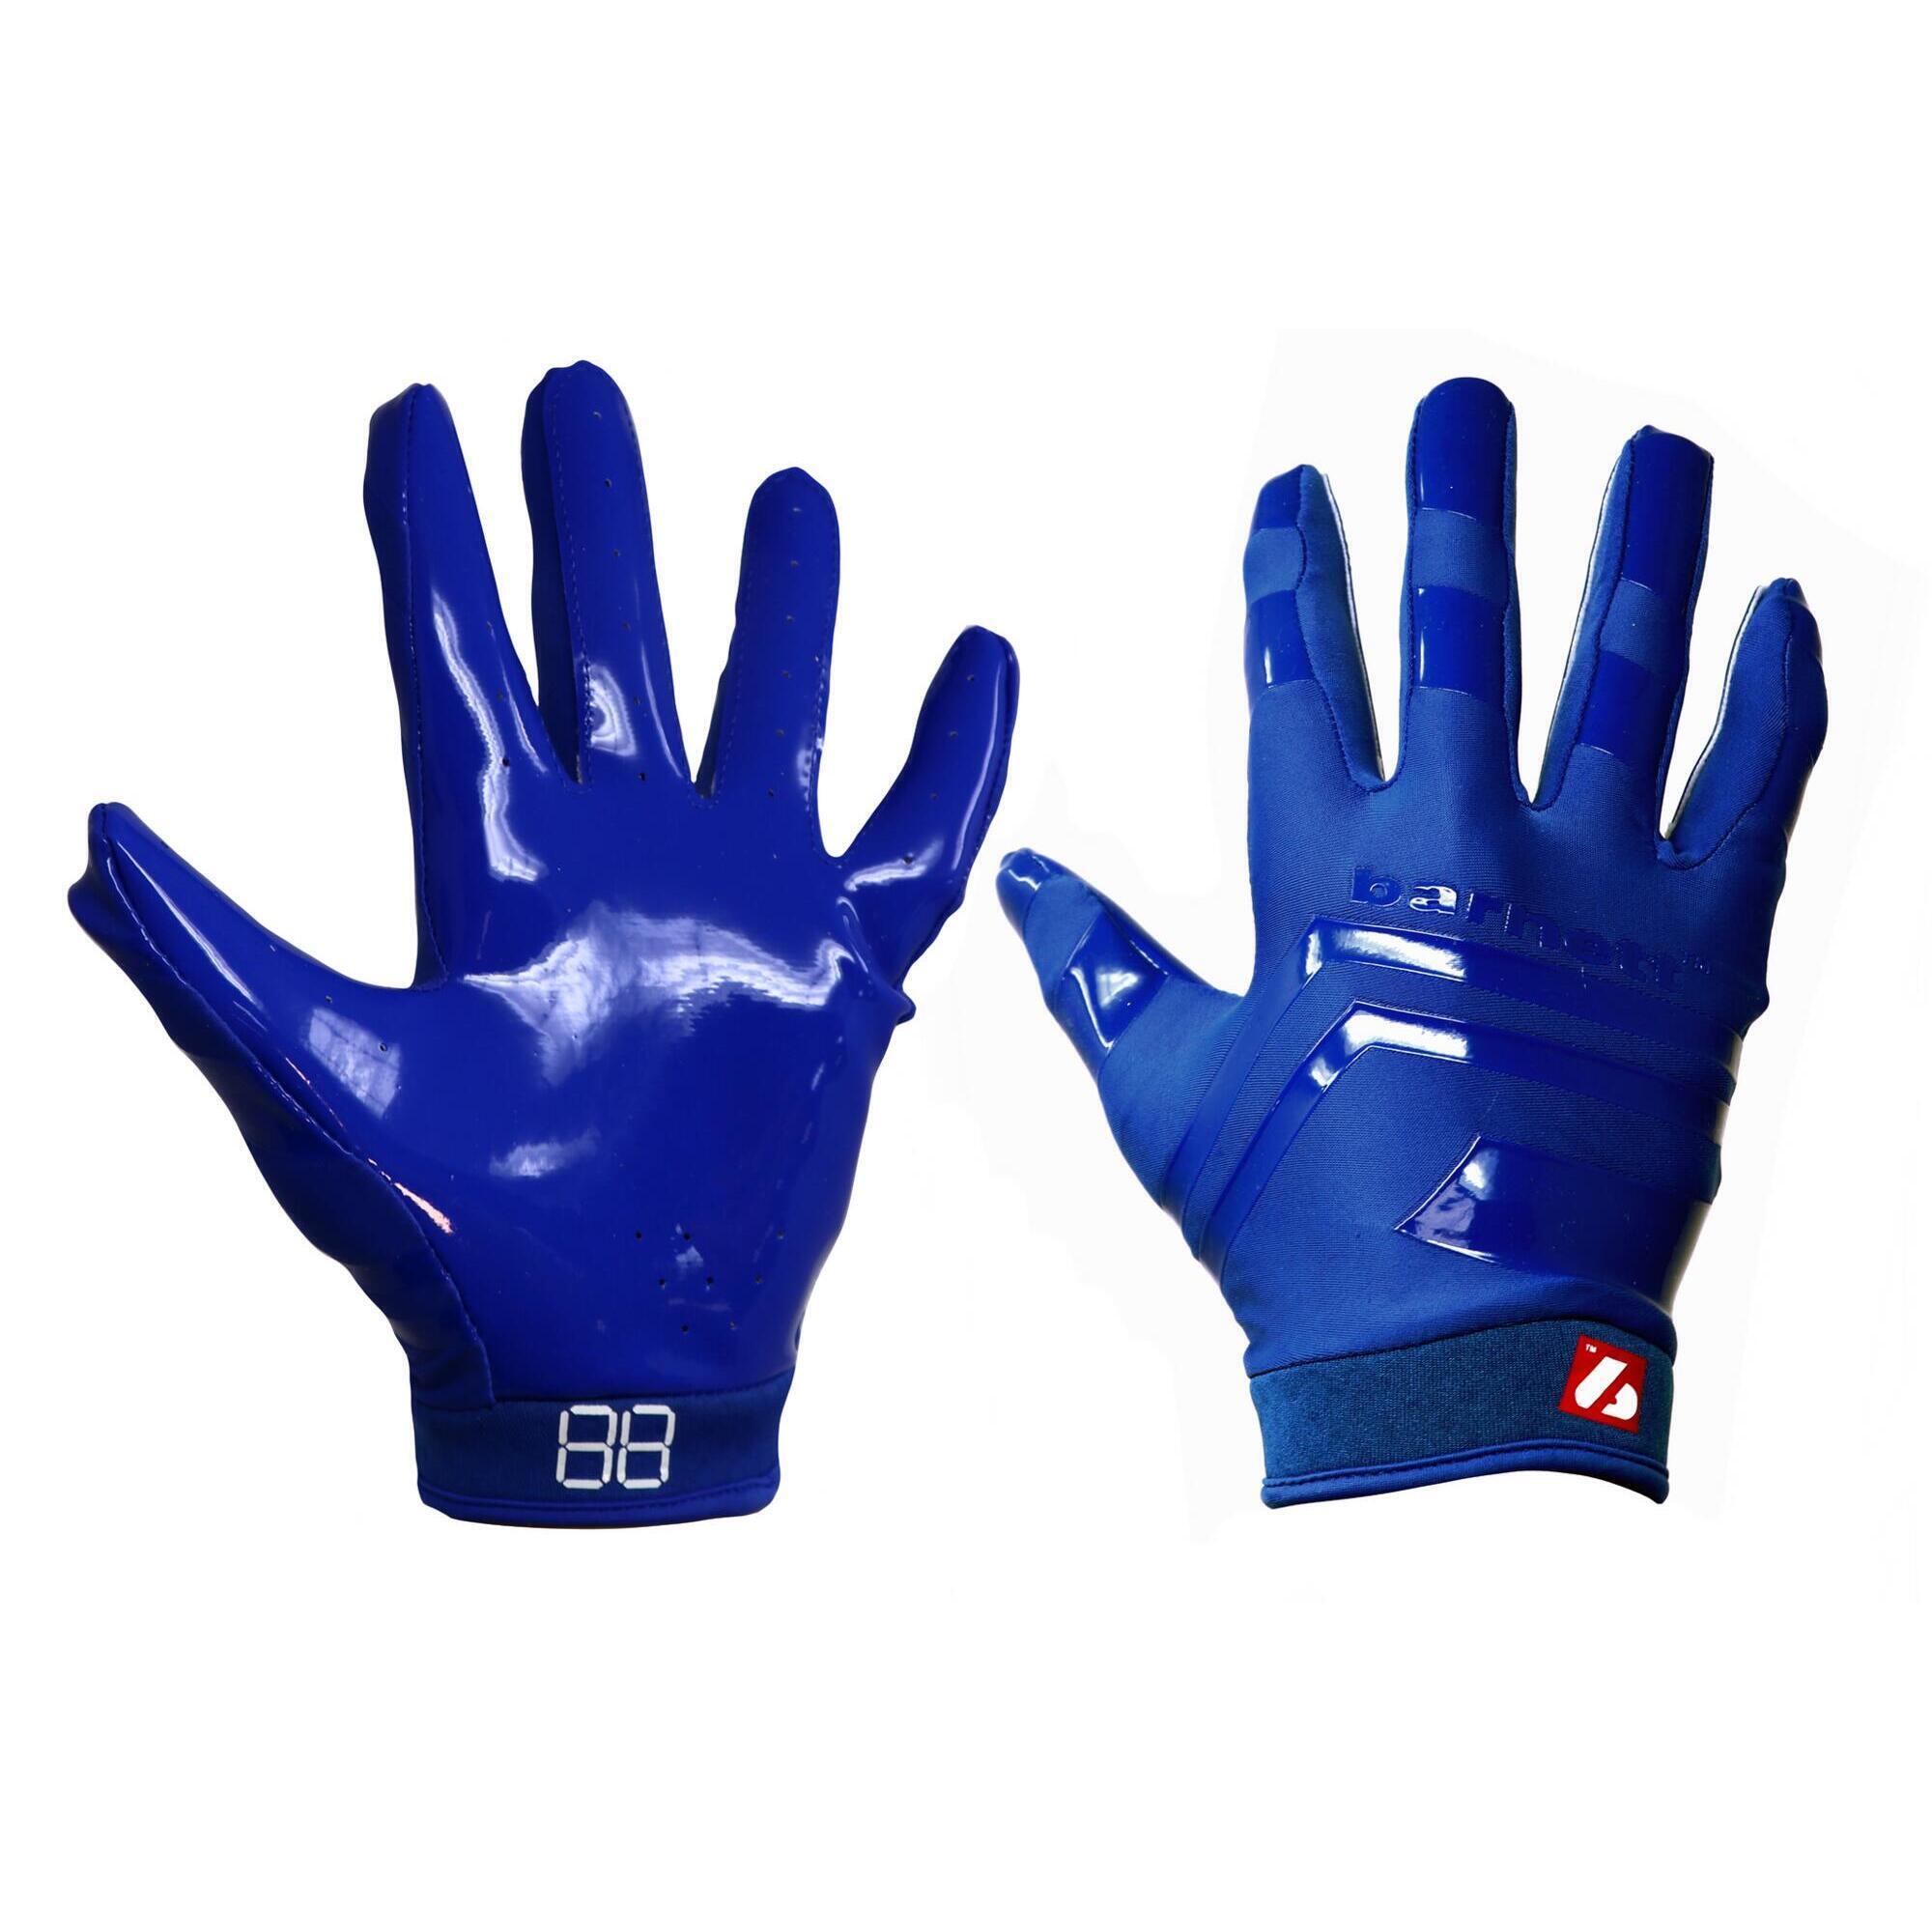  pro receiver american football gloves, RE,DB,RB, Blue FRG-03 1/5